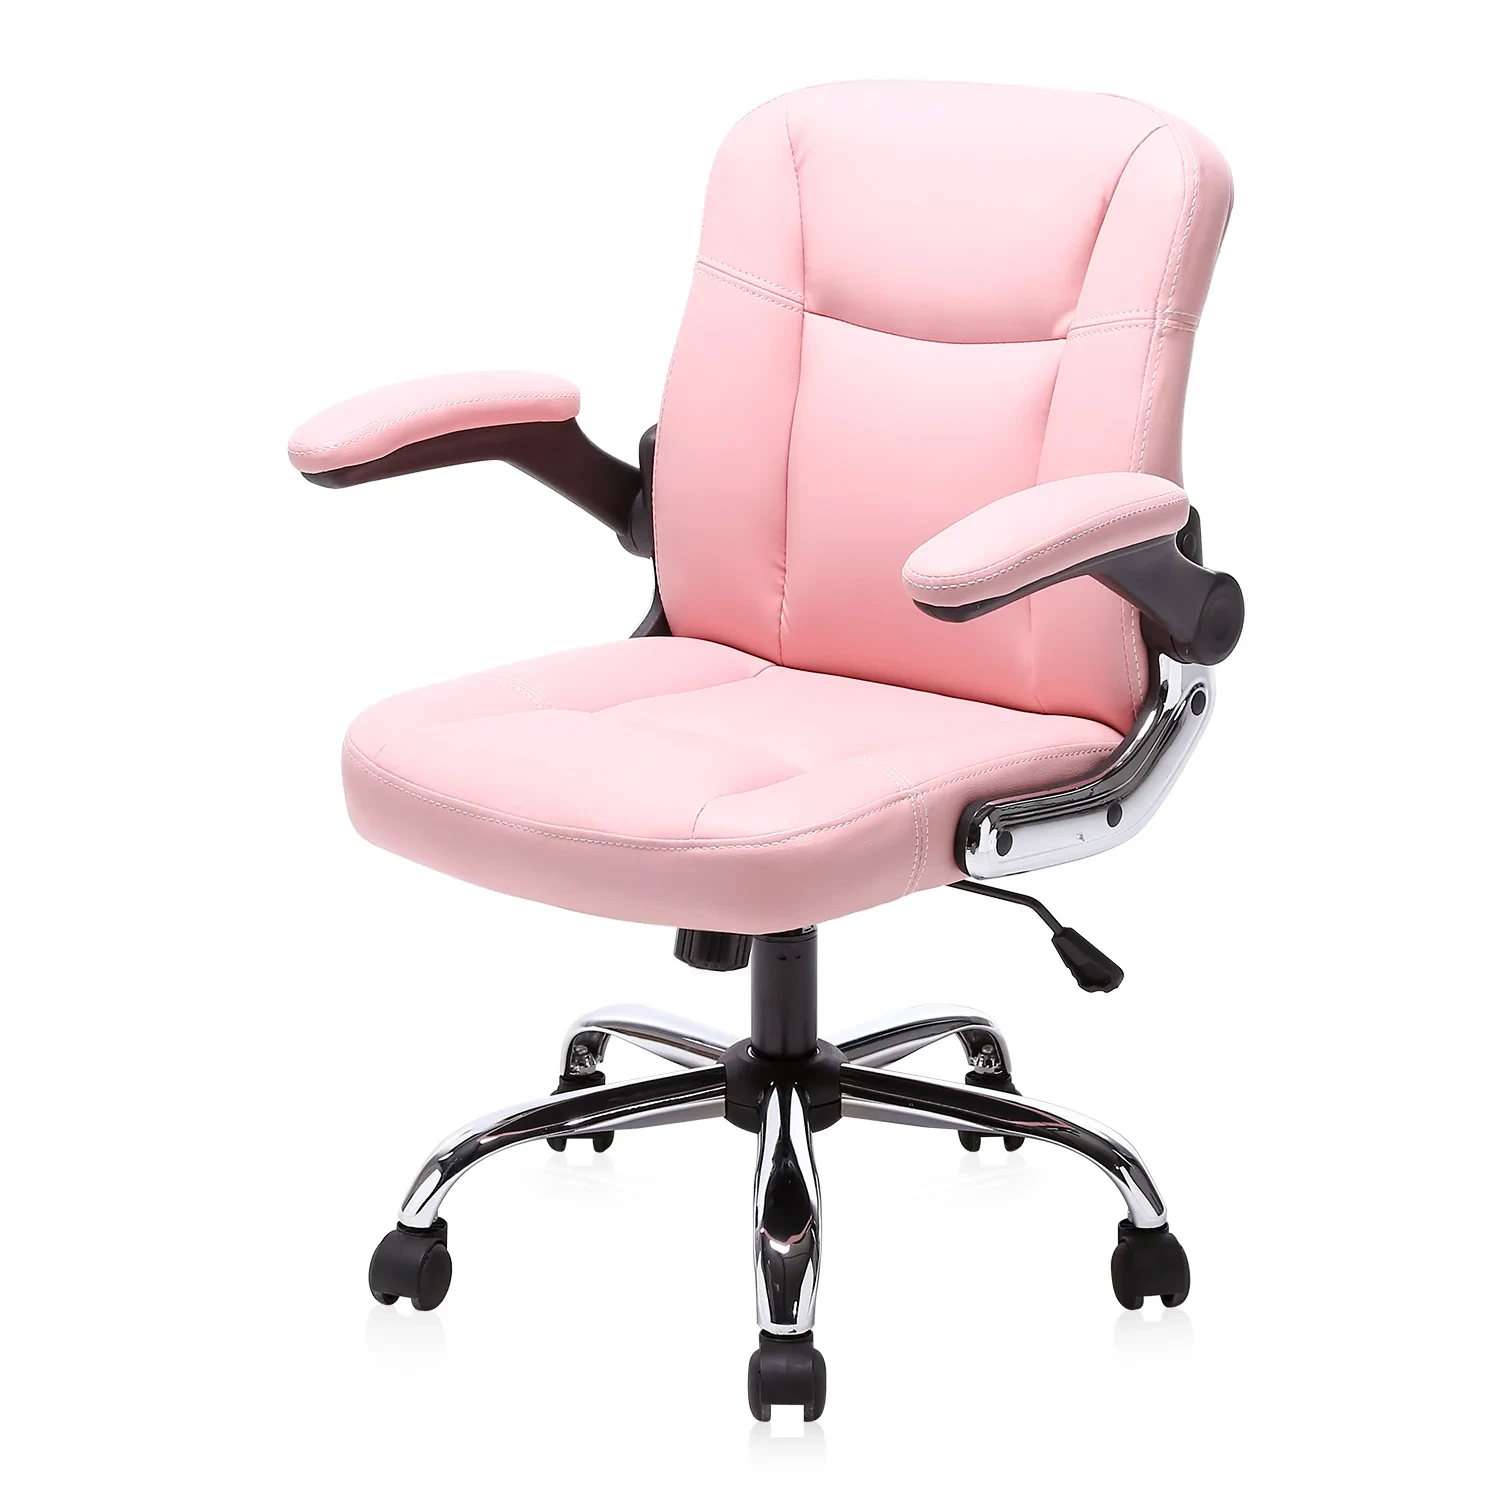 YAMASORO Mid Back Leather MidBack Chair - pink